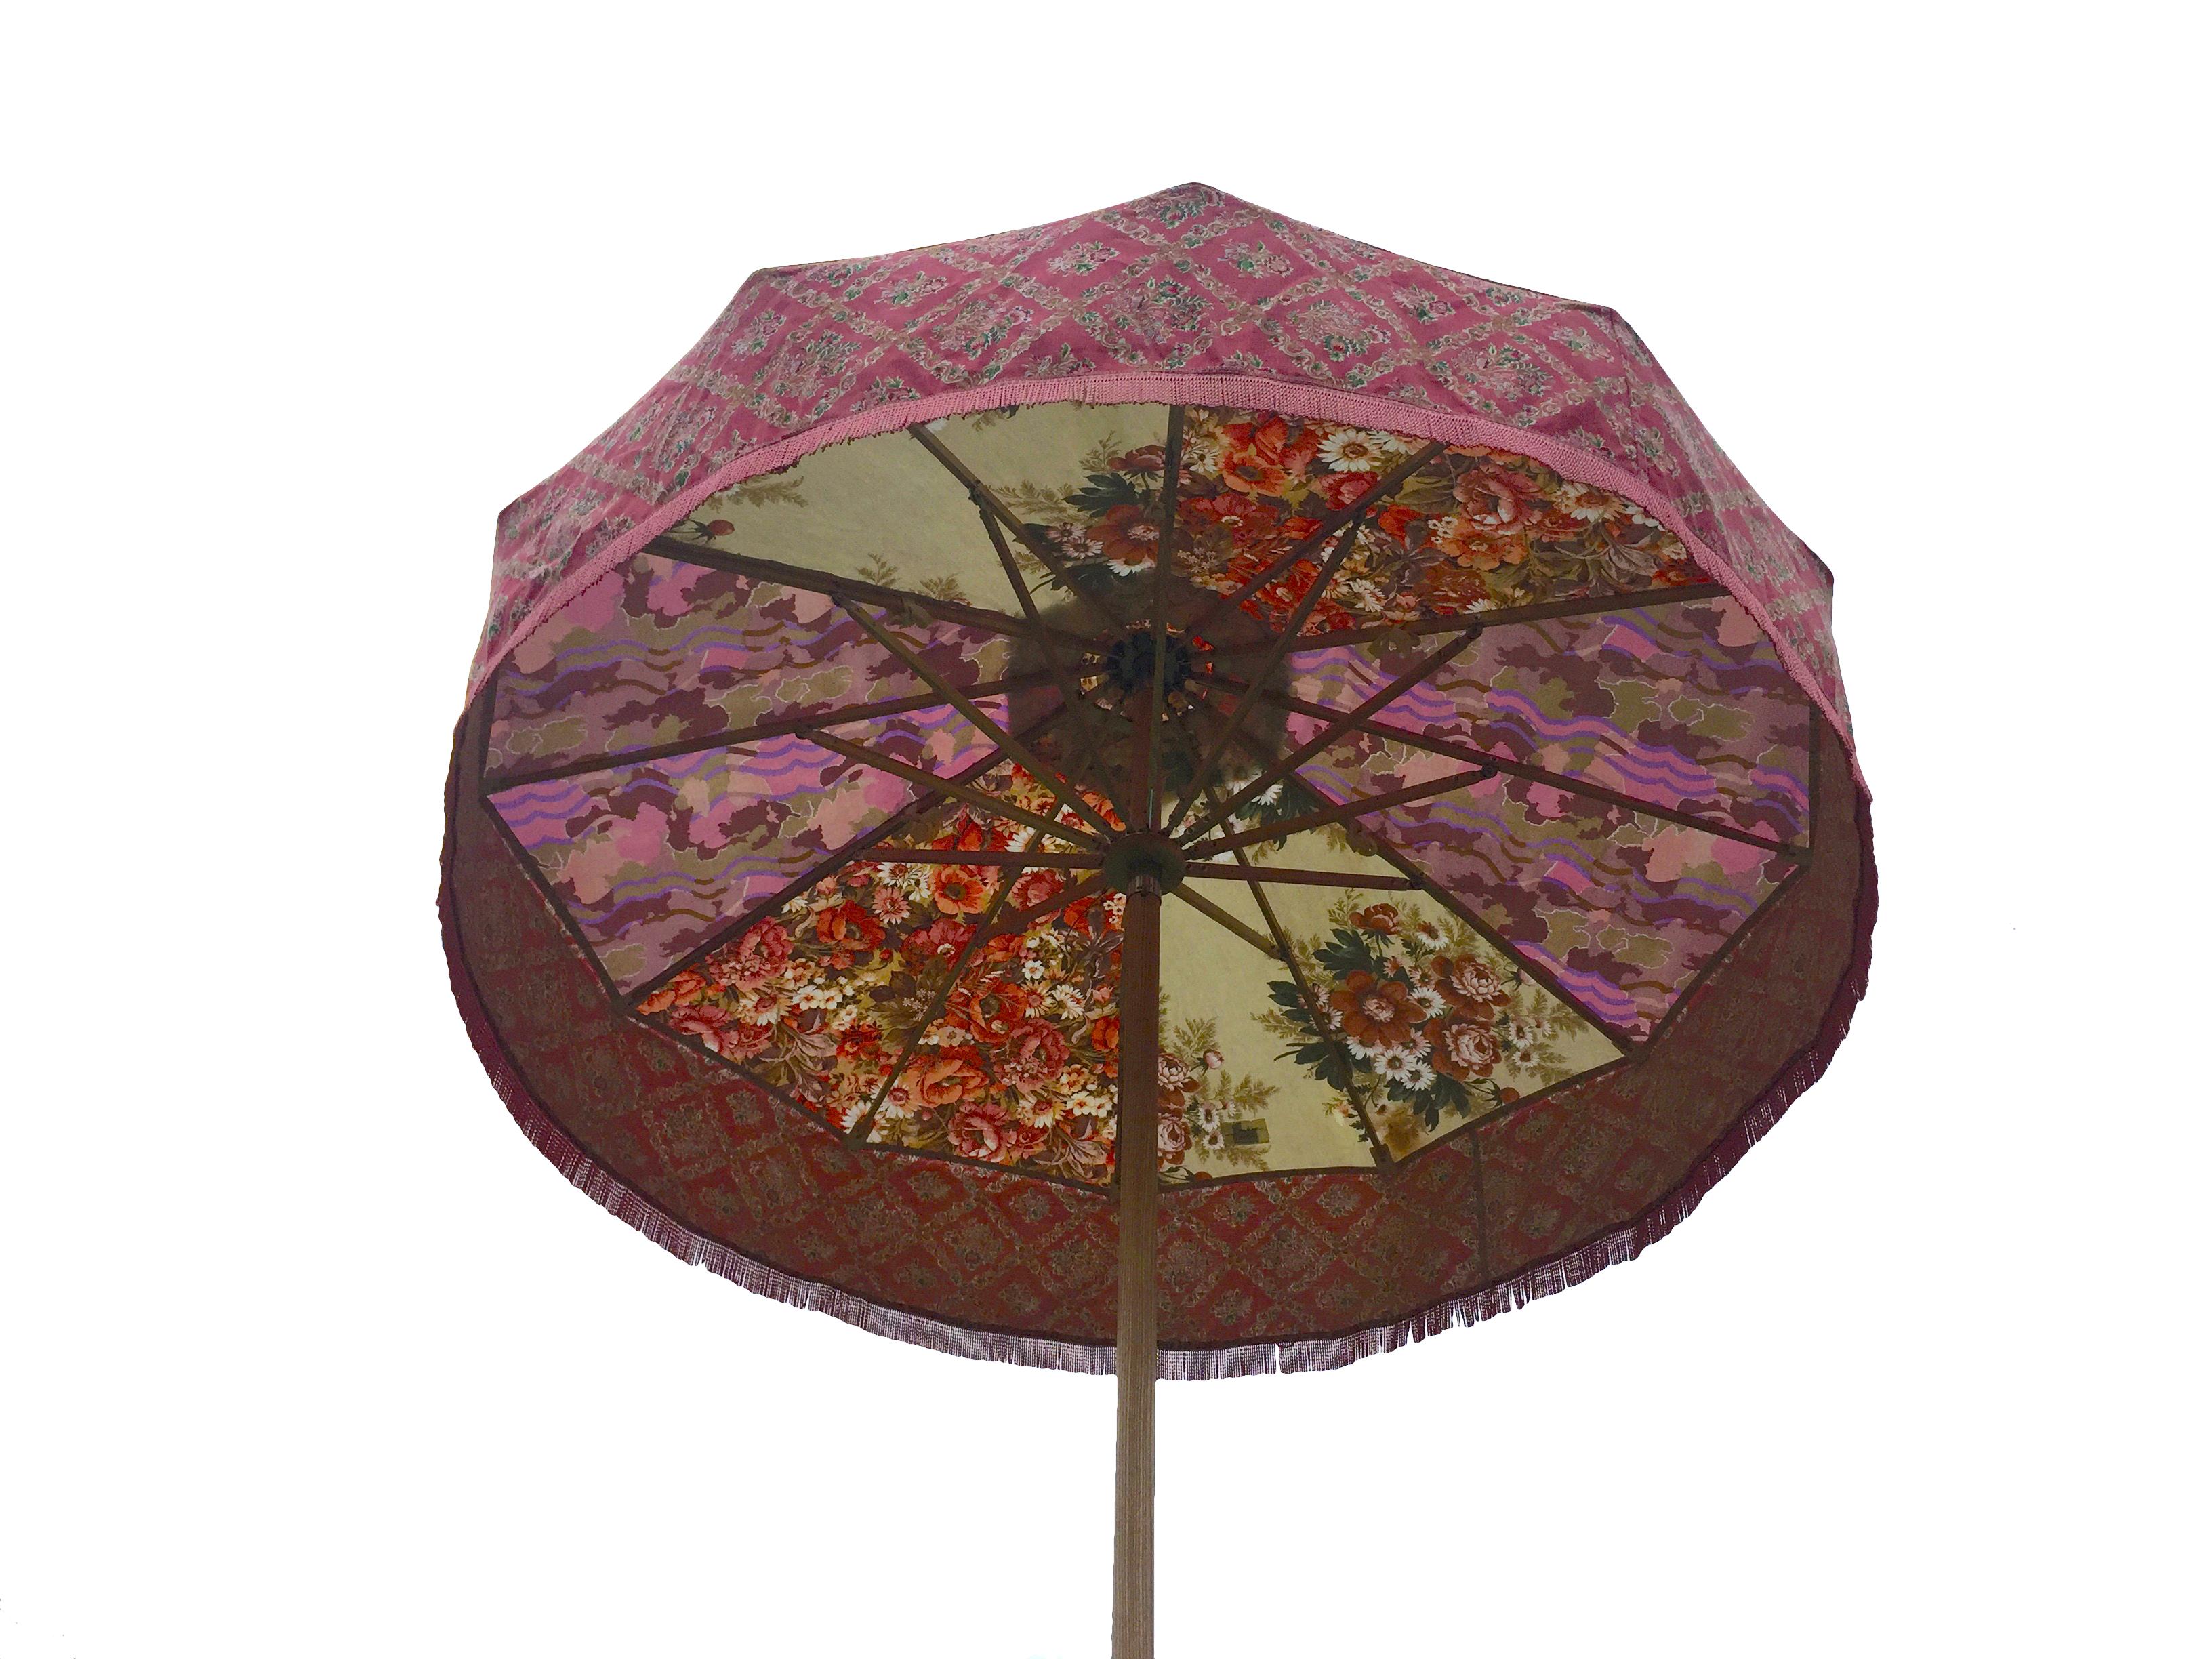 iconic beach umbrella